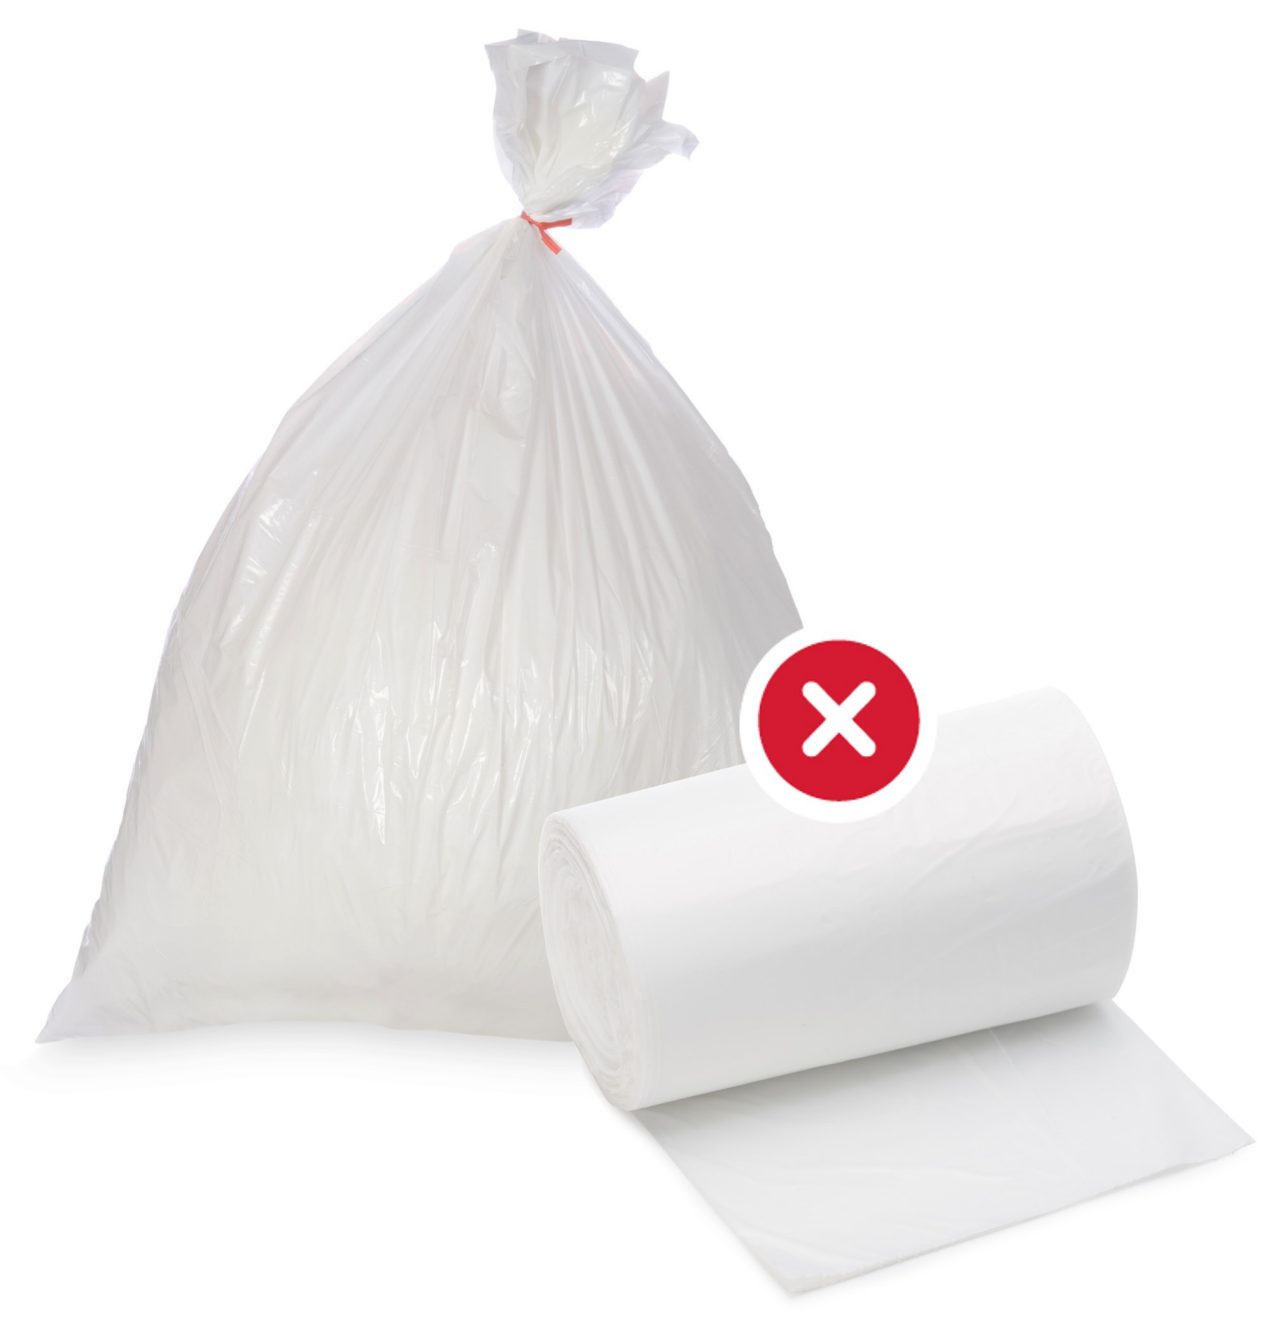 Unacceptable bag liners